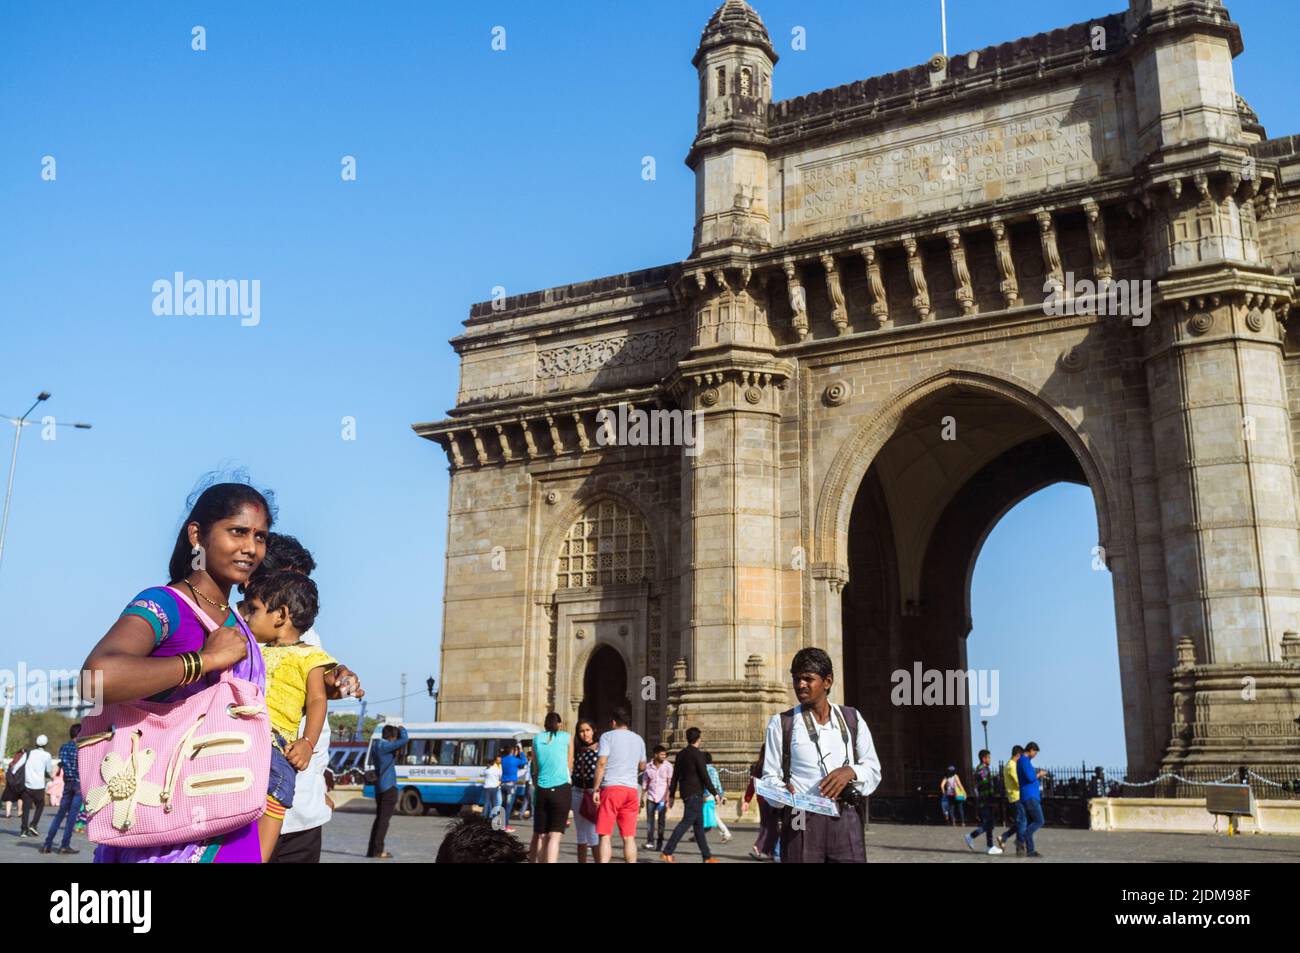 Mumbai, Maharashtra, India : People gather around the Gateway of India monumental arch built betwen 1913 and 1924 in the Indo-Saracenic style. Stock Photo